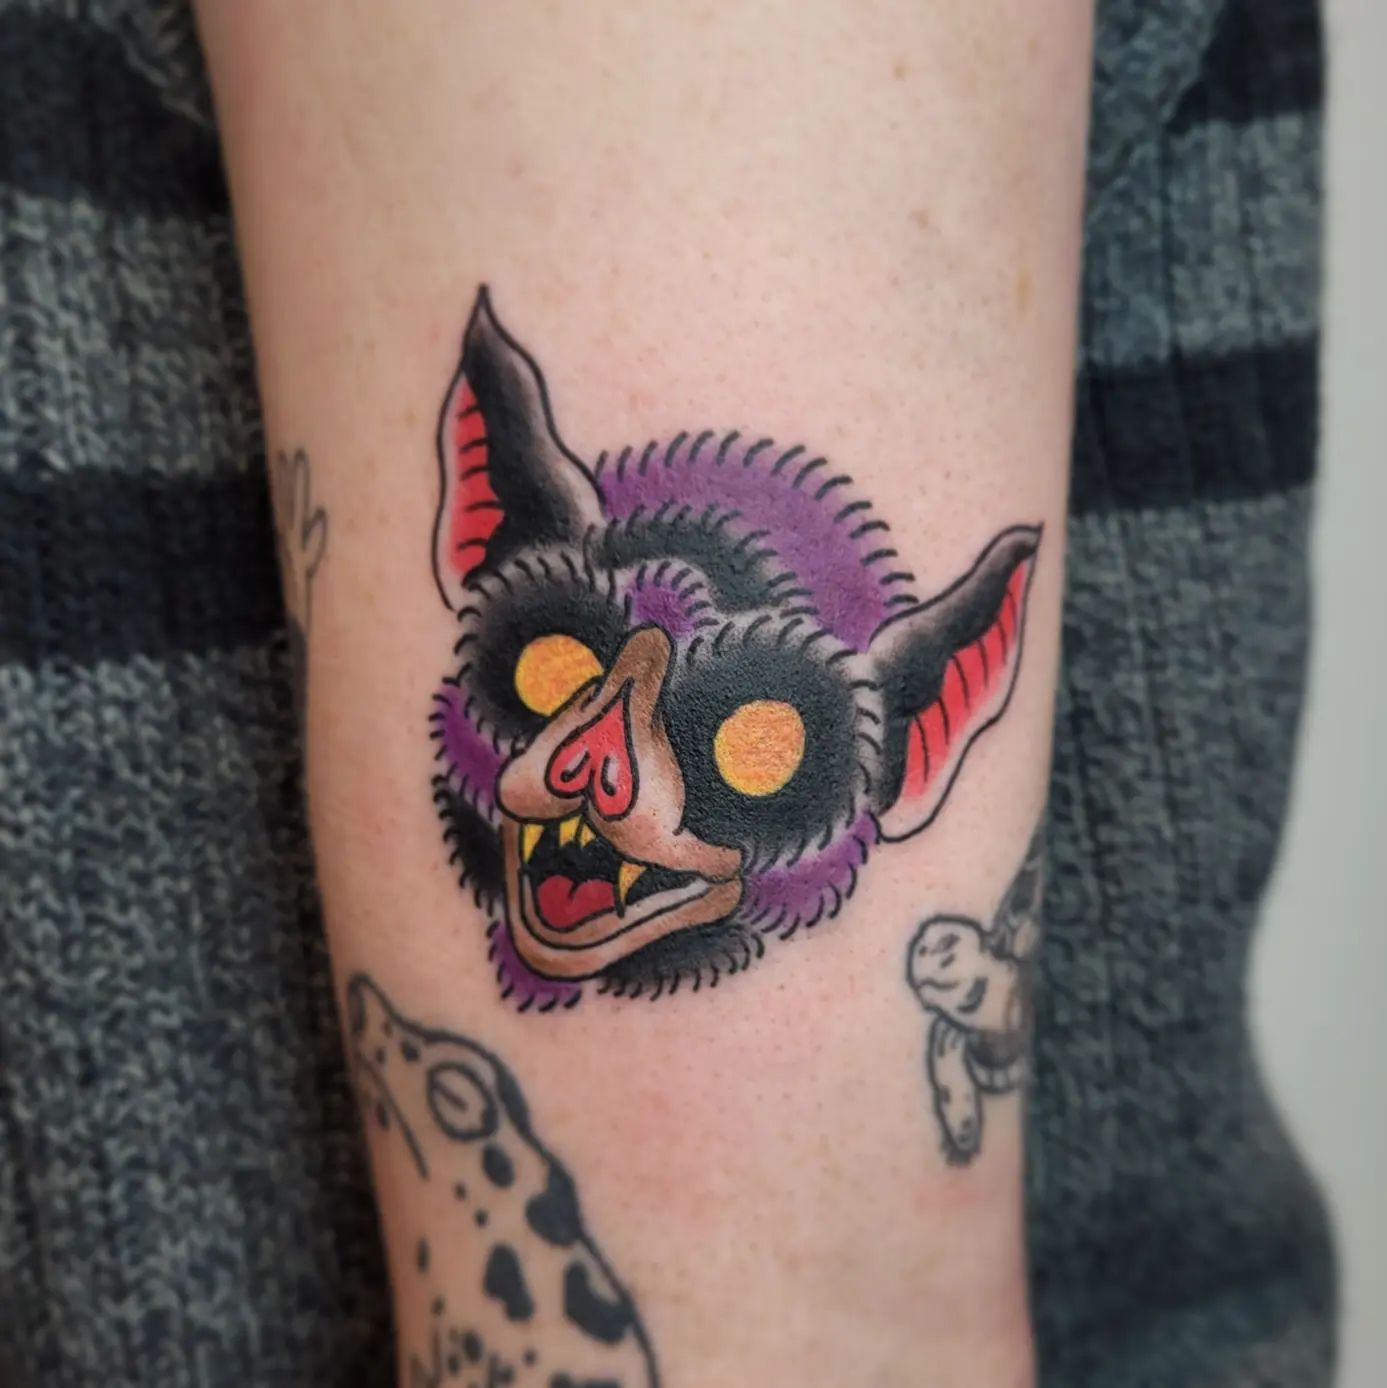 Awesome Gothic Bat Tattoo Design